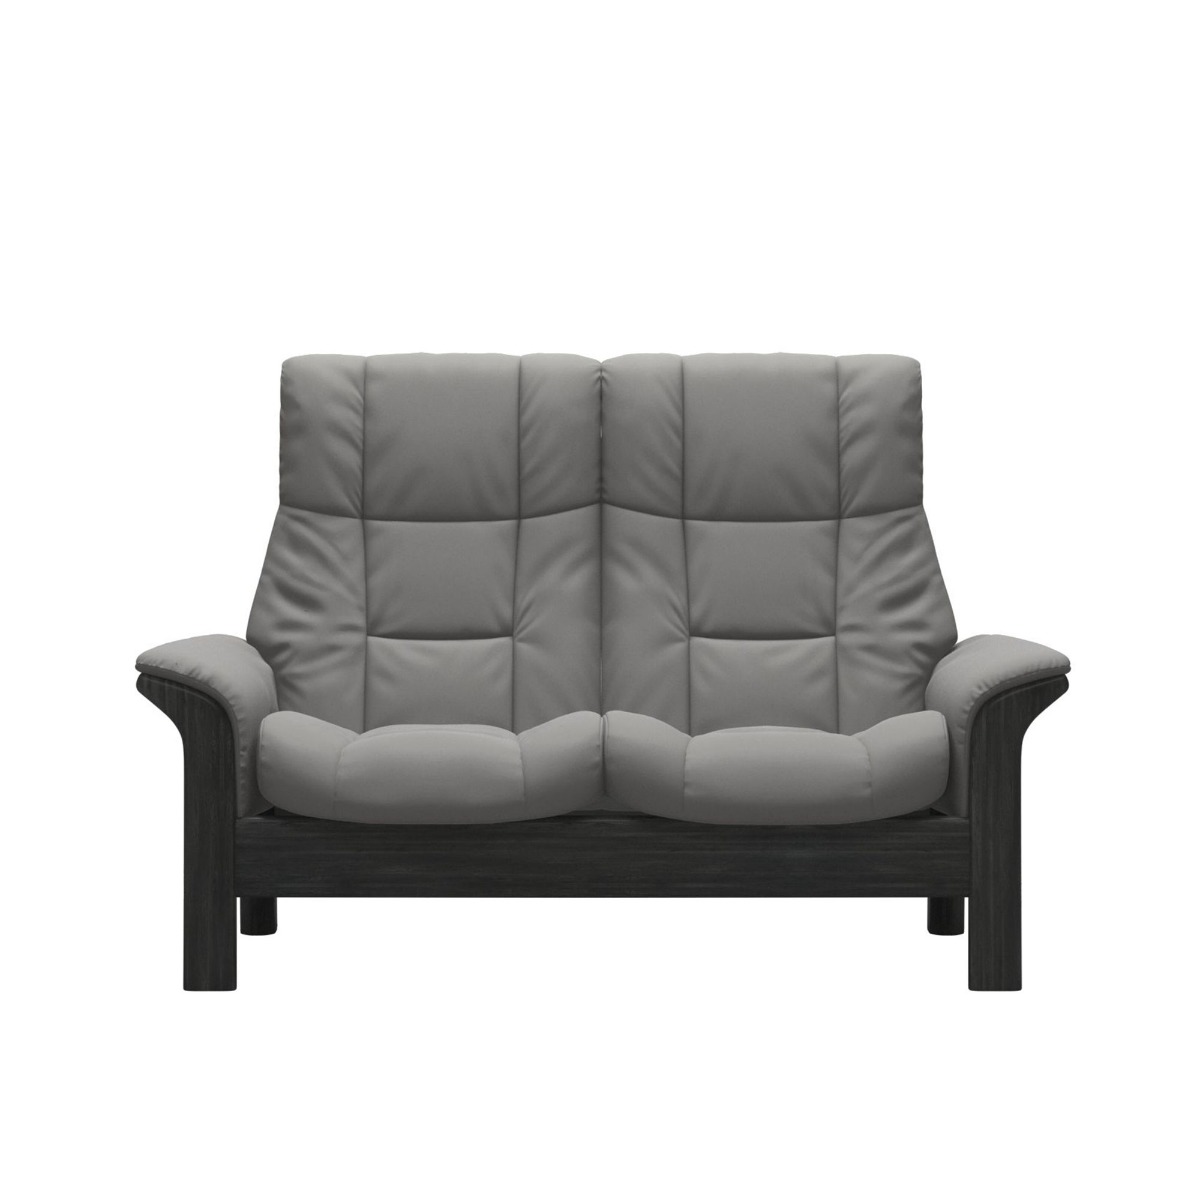 Stressless Windsor High Back 2 Seater Recliner Sofa, Grey Leather | Barker & Stonehouse